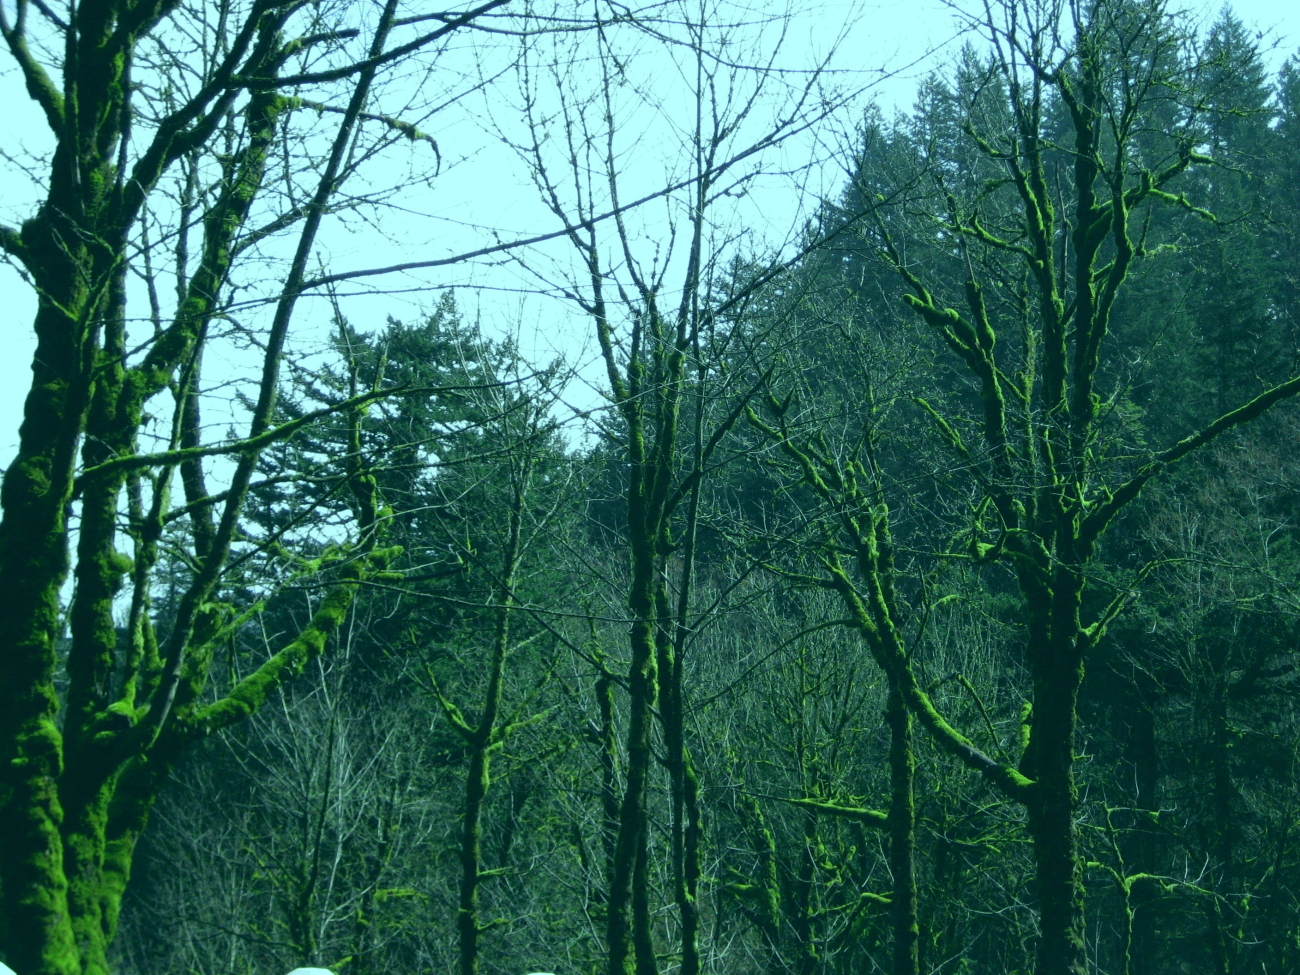 Mossy trees near Multnomah Falls